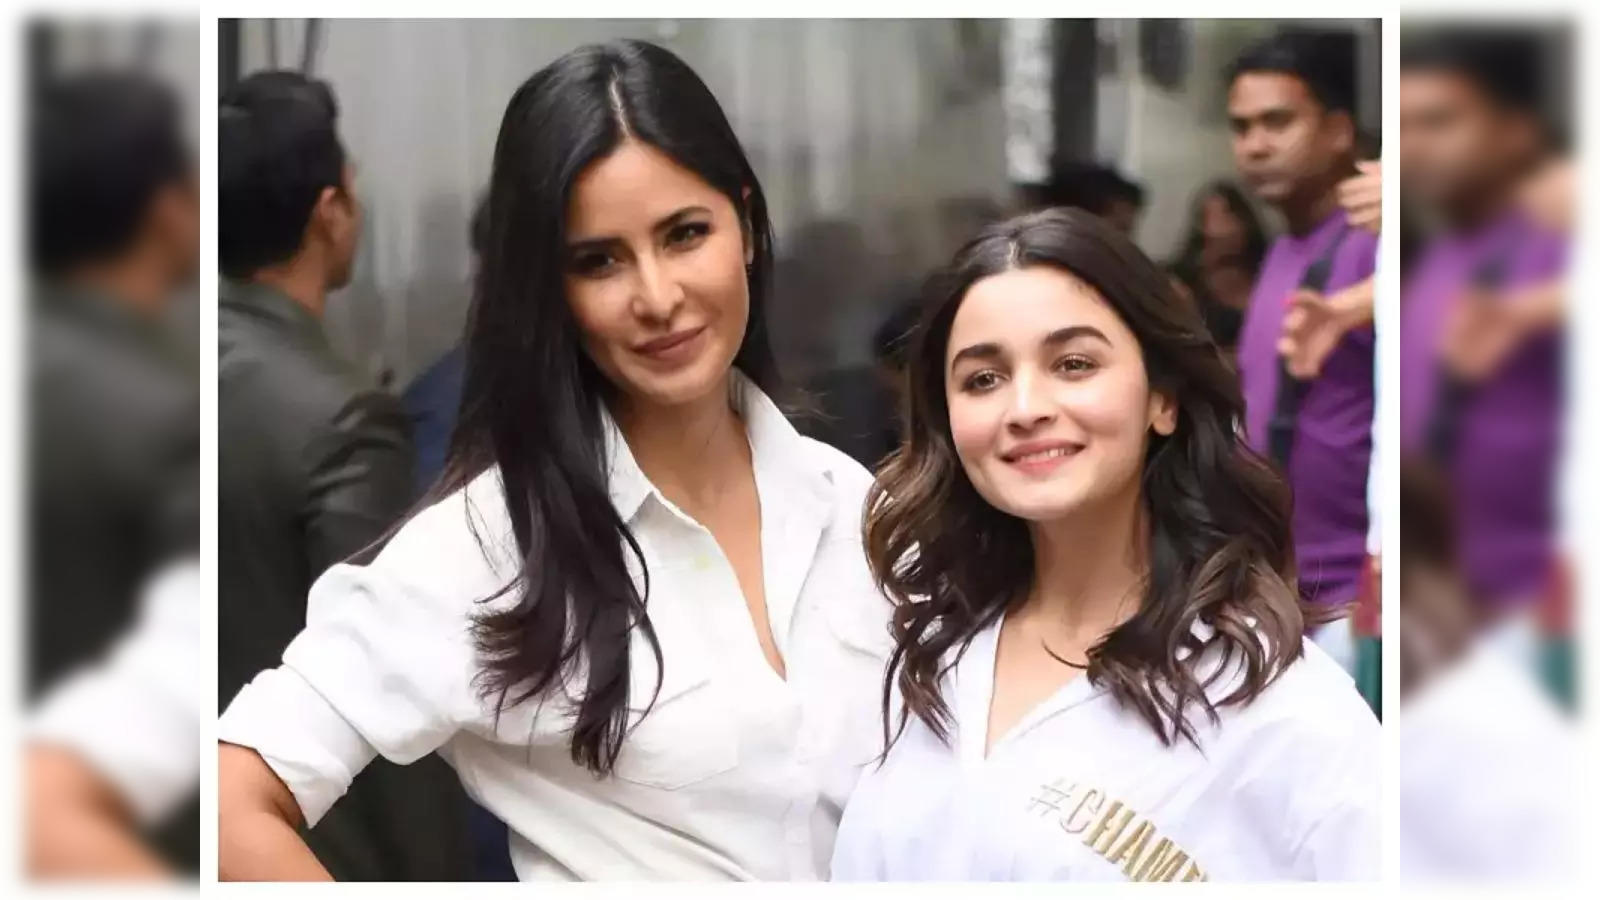 Xxx Alia Batt - alia bhatt: 'Everyone has moved on': Video of Alia Bhatt bonding with  Katrina-Vicky at Mumbai airport goes viral, fans laud actresses for getting  along - The Economic Times